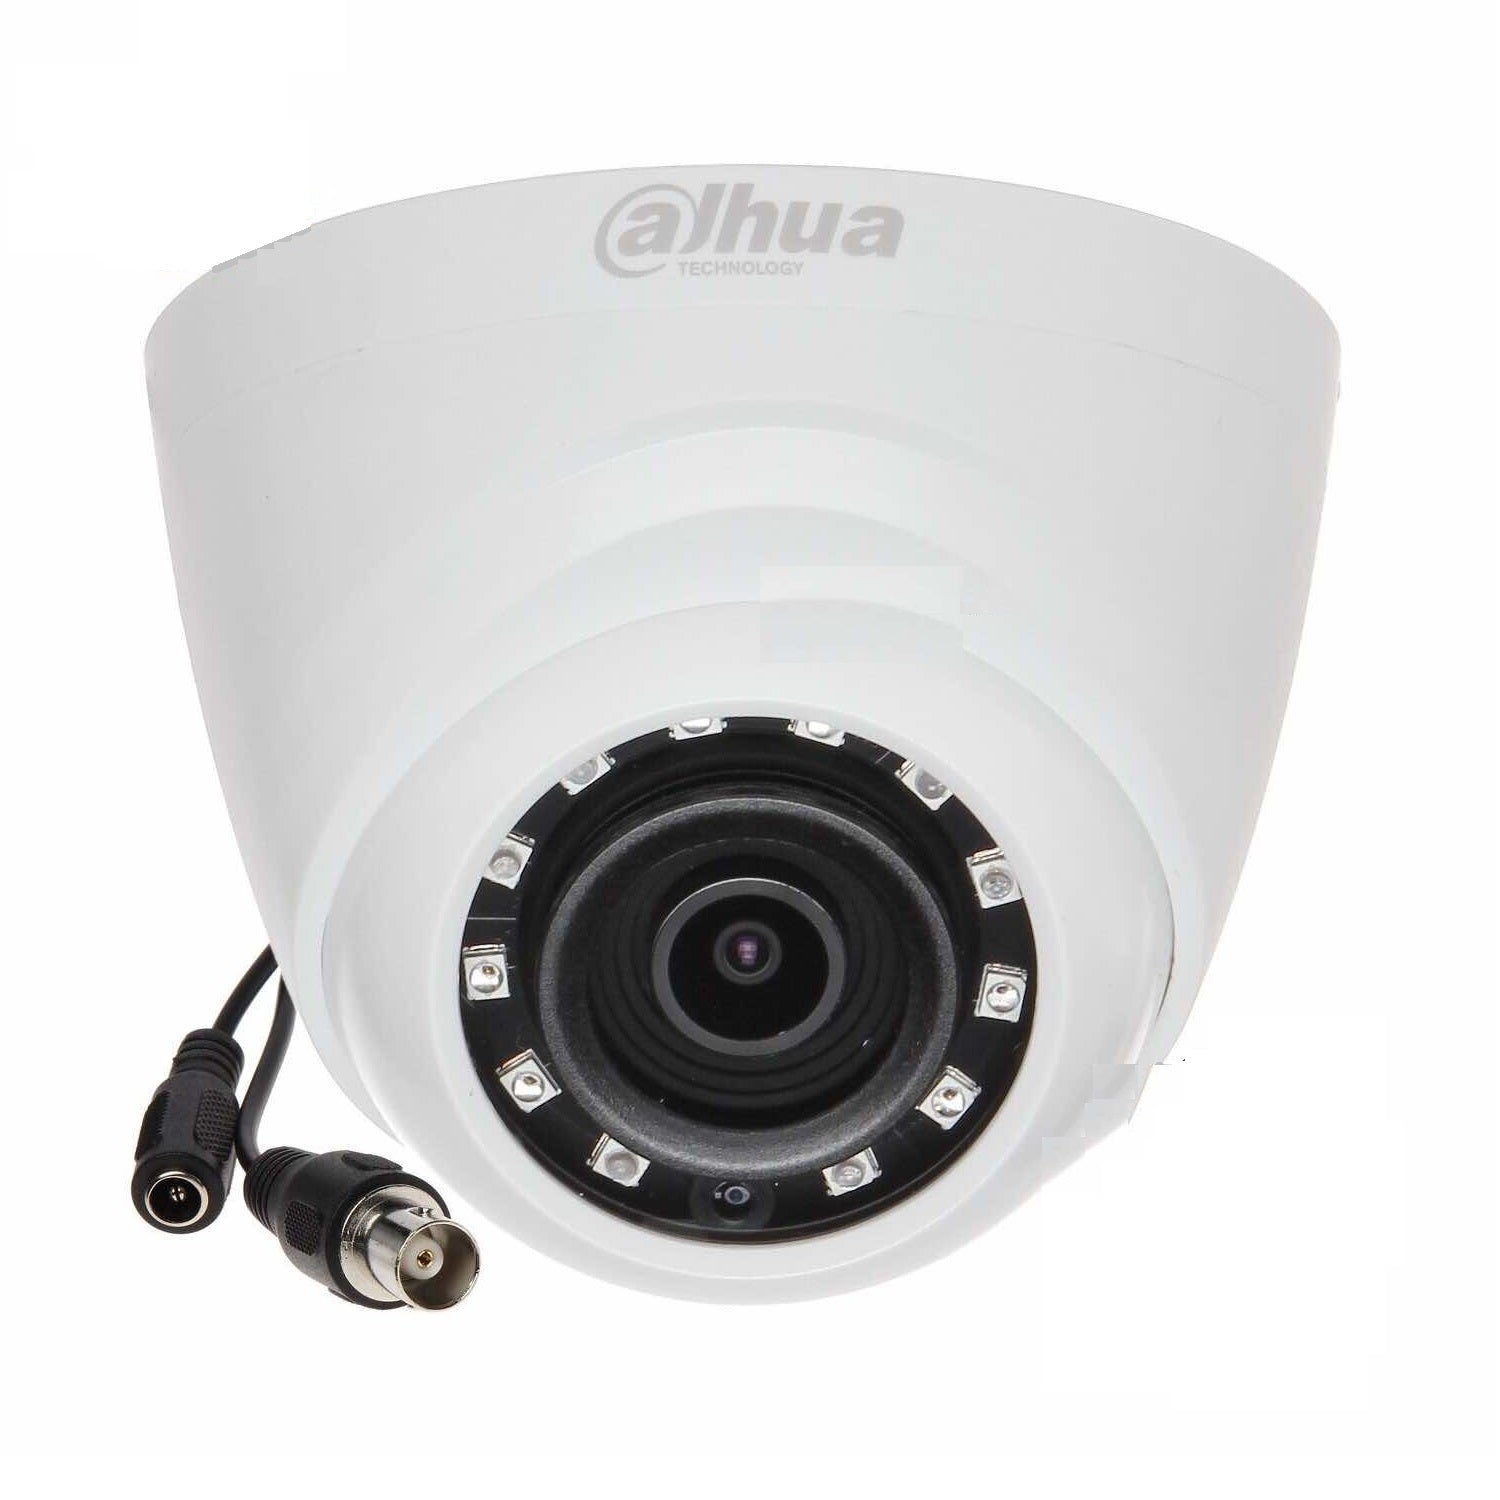 Dahua 2MP HDCVI Dome Camera DH-HAC-HDW1220RP